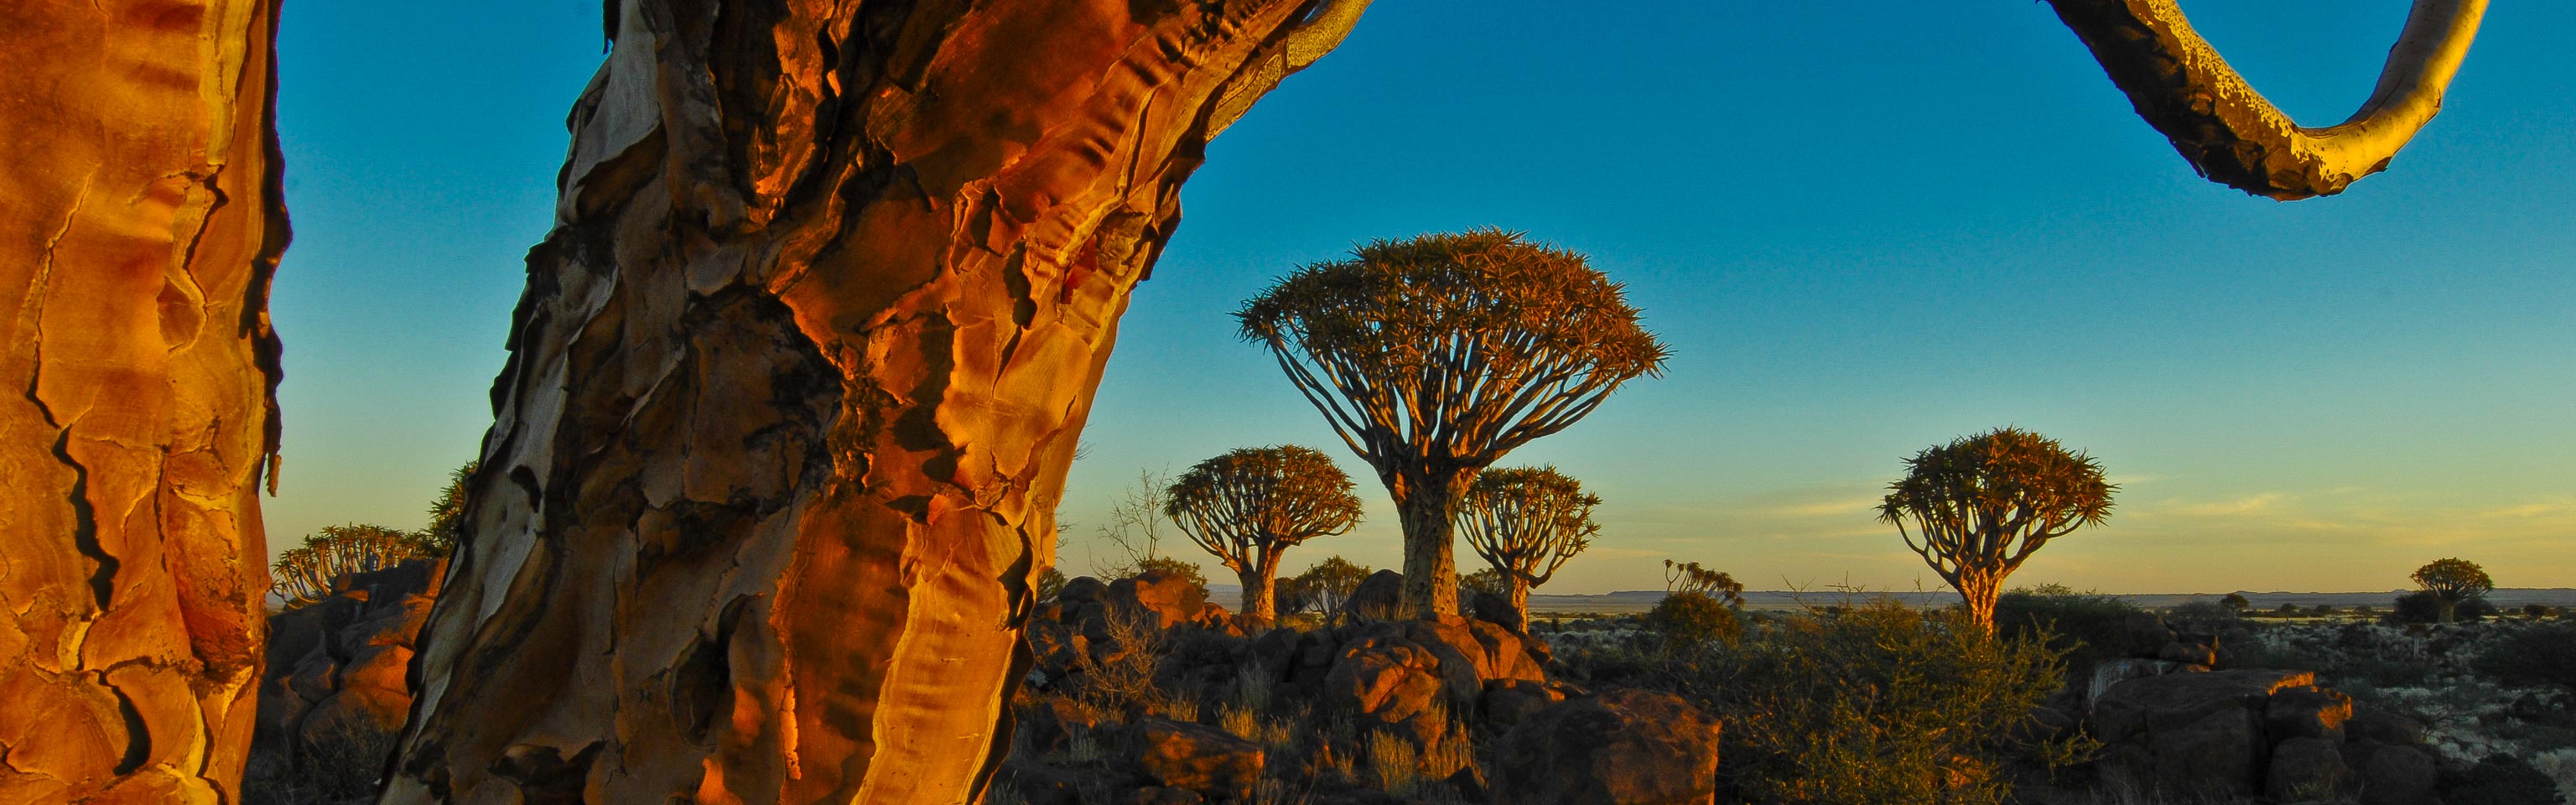 Quivertree forest near Ketmannshoop, Namibia